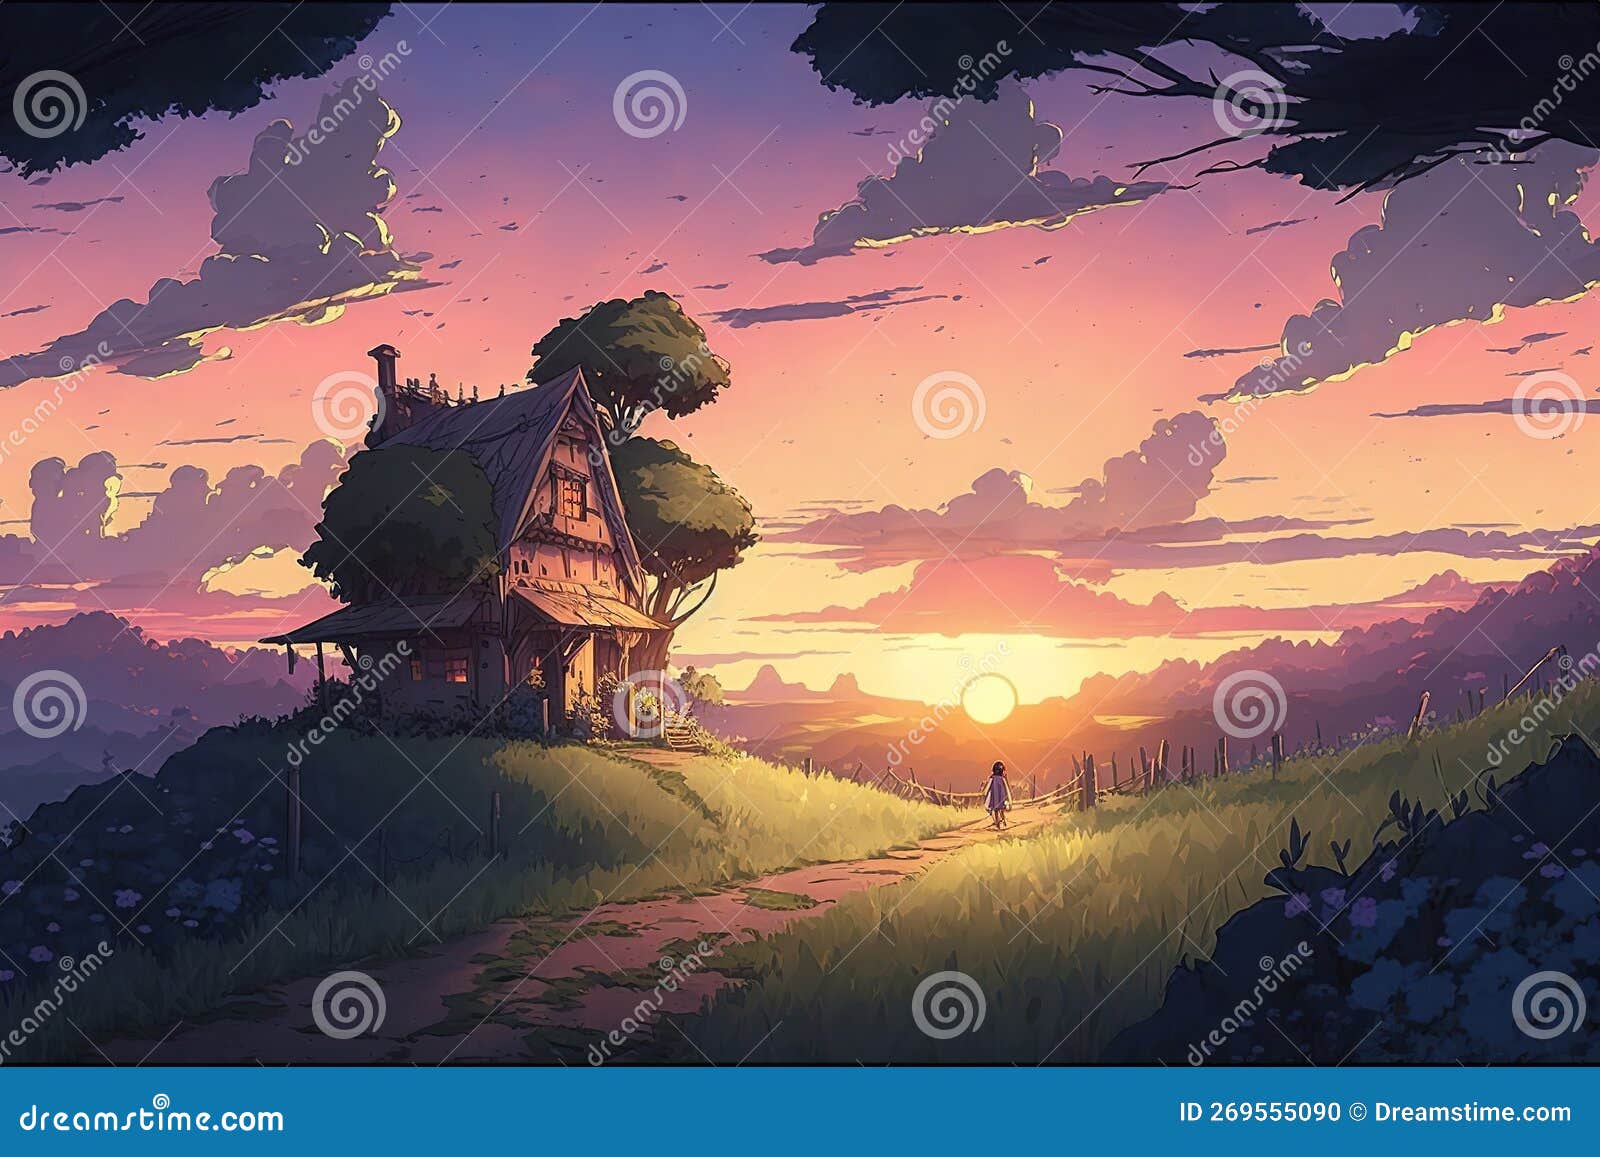 Anime Sunrise Scenery Sky Clouds 4K Wallpaper #222